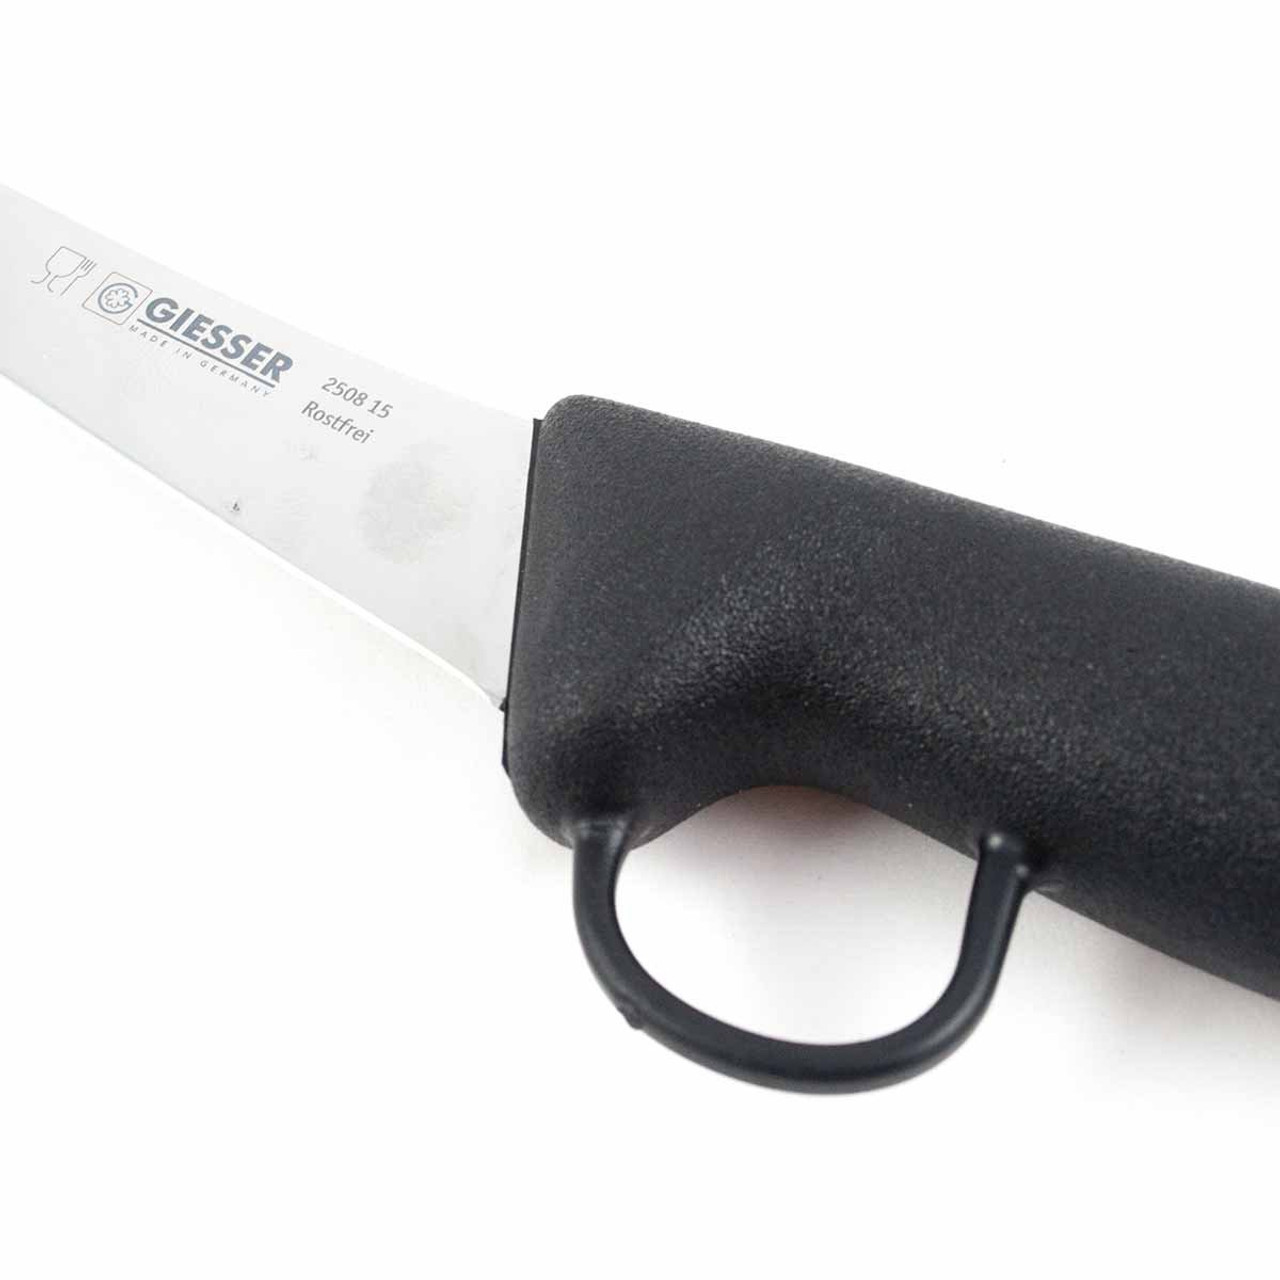 Giesser Boning Knives (Body Guard Safety Handle) - Walton's